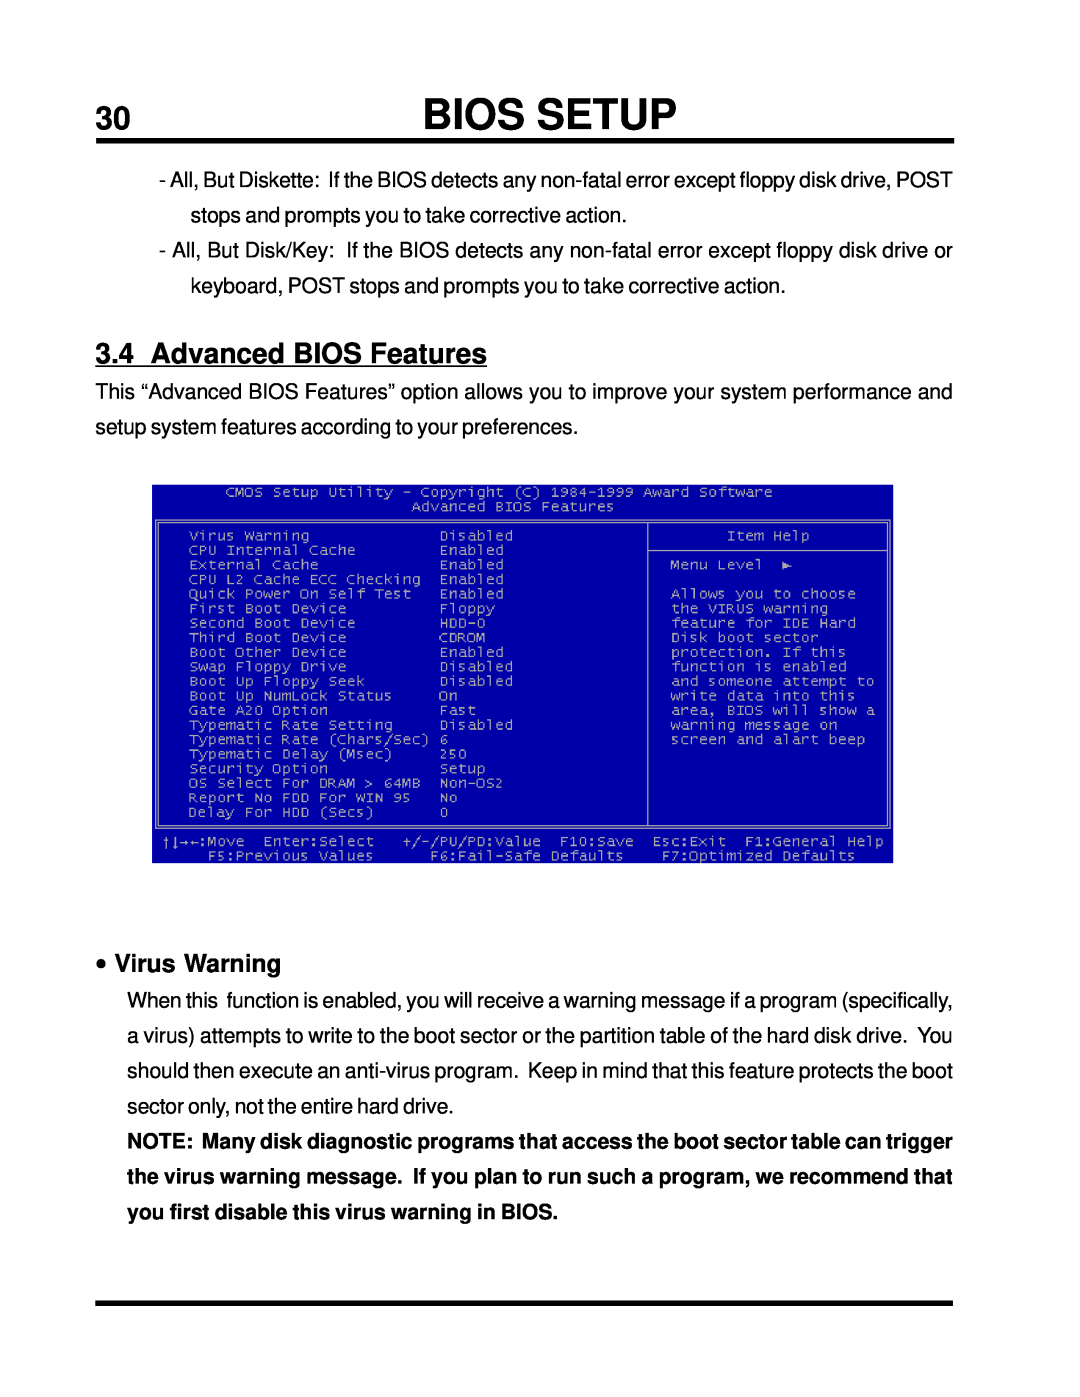 Intel TS-ASP3 user manual 3.4Advanced BIOS Features, •Virus Warning, Bios Setup 